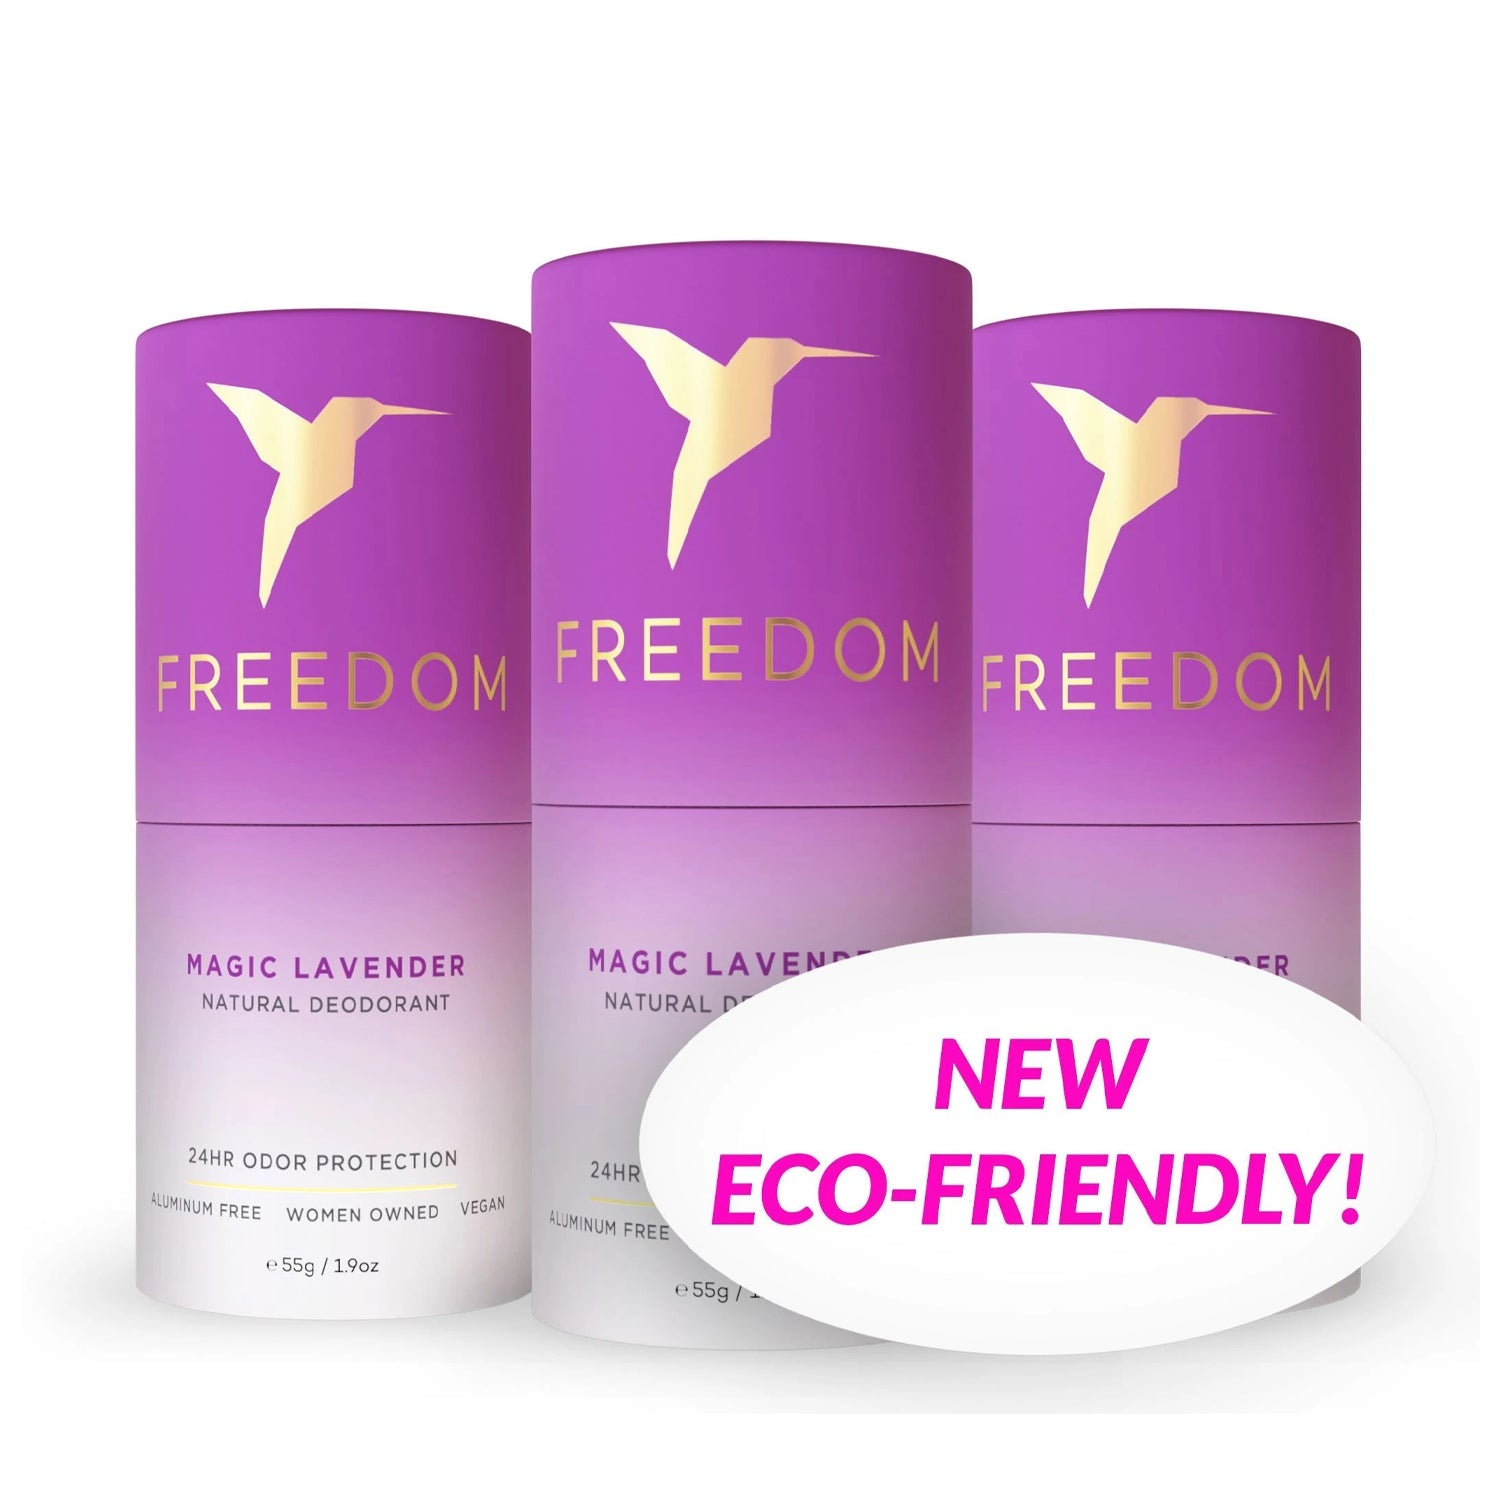 All Natural Deodorant - Eco Friendly! Deodorant Freedom Magic Lavender (Eco-Friendly Paper) 3-Pack 